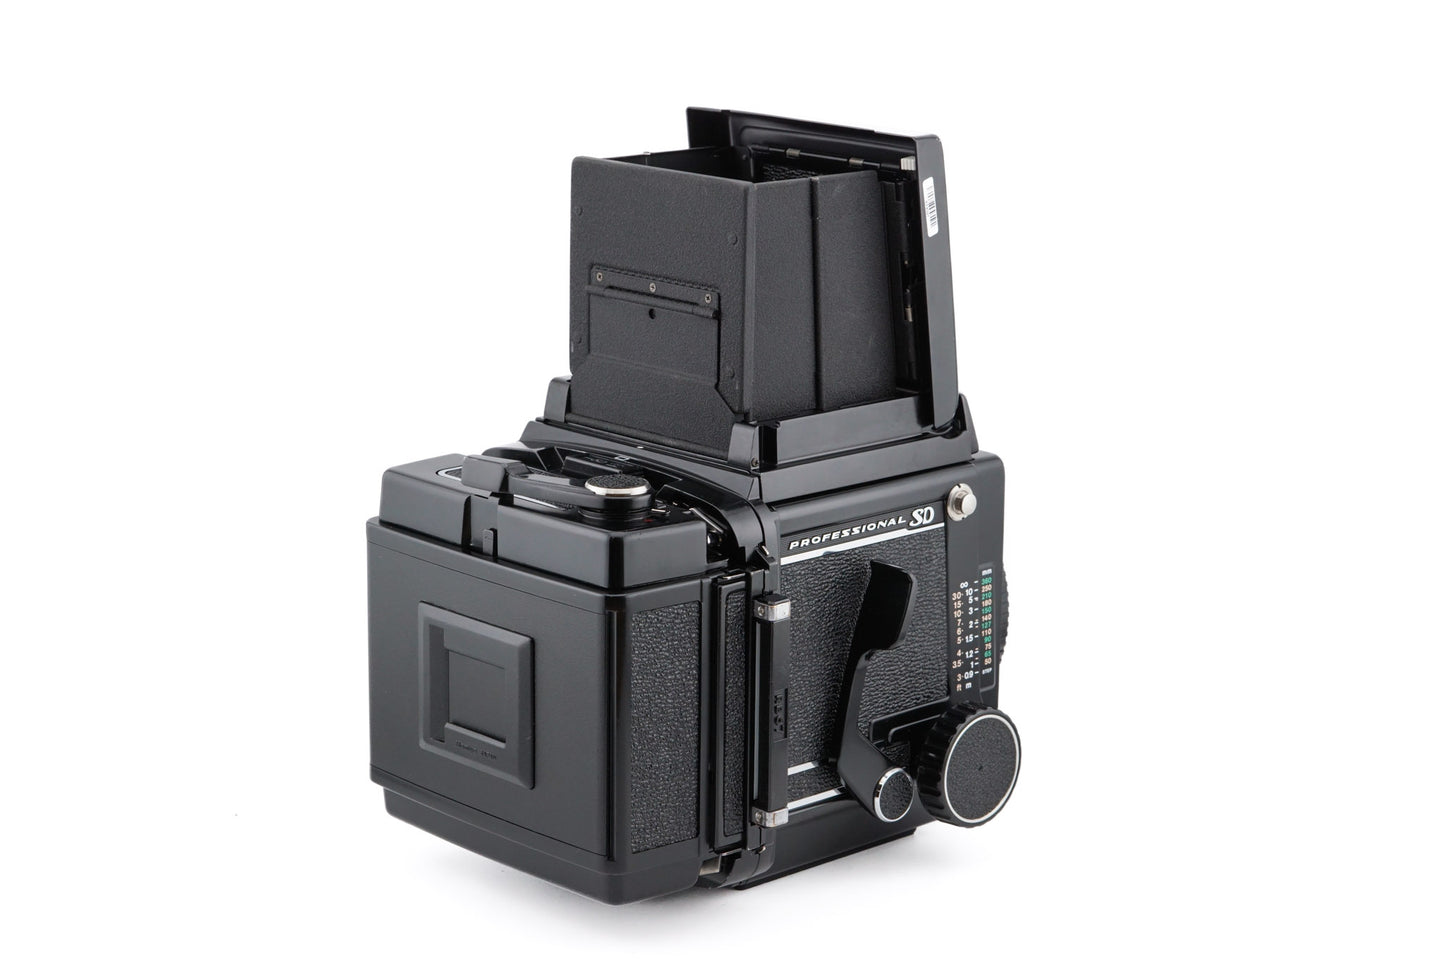 Mamiya RB67 Pro SD + 120 Pro-SD 6x7 Film Back + Waist Level Finder